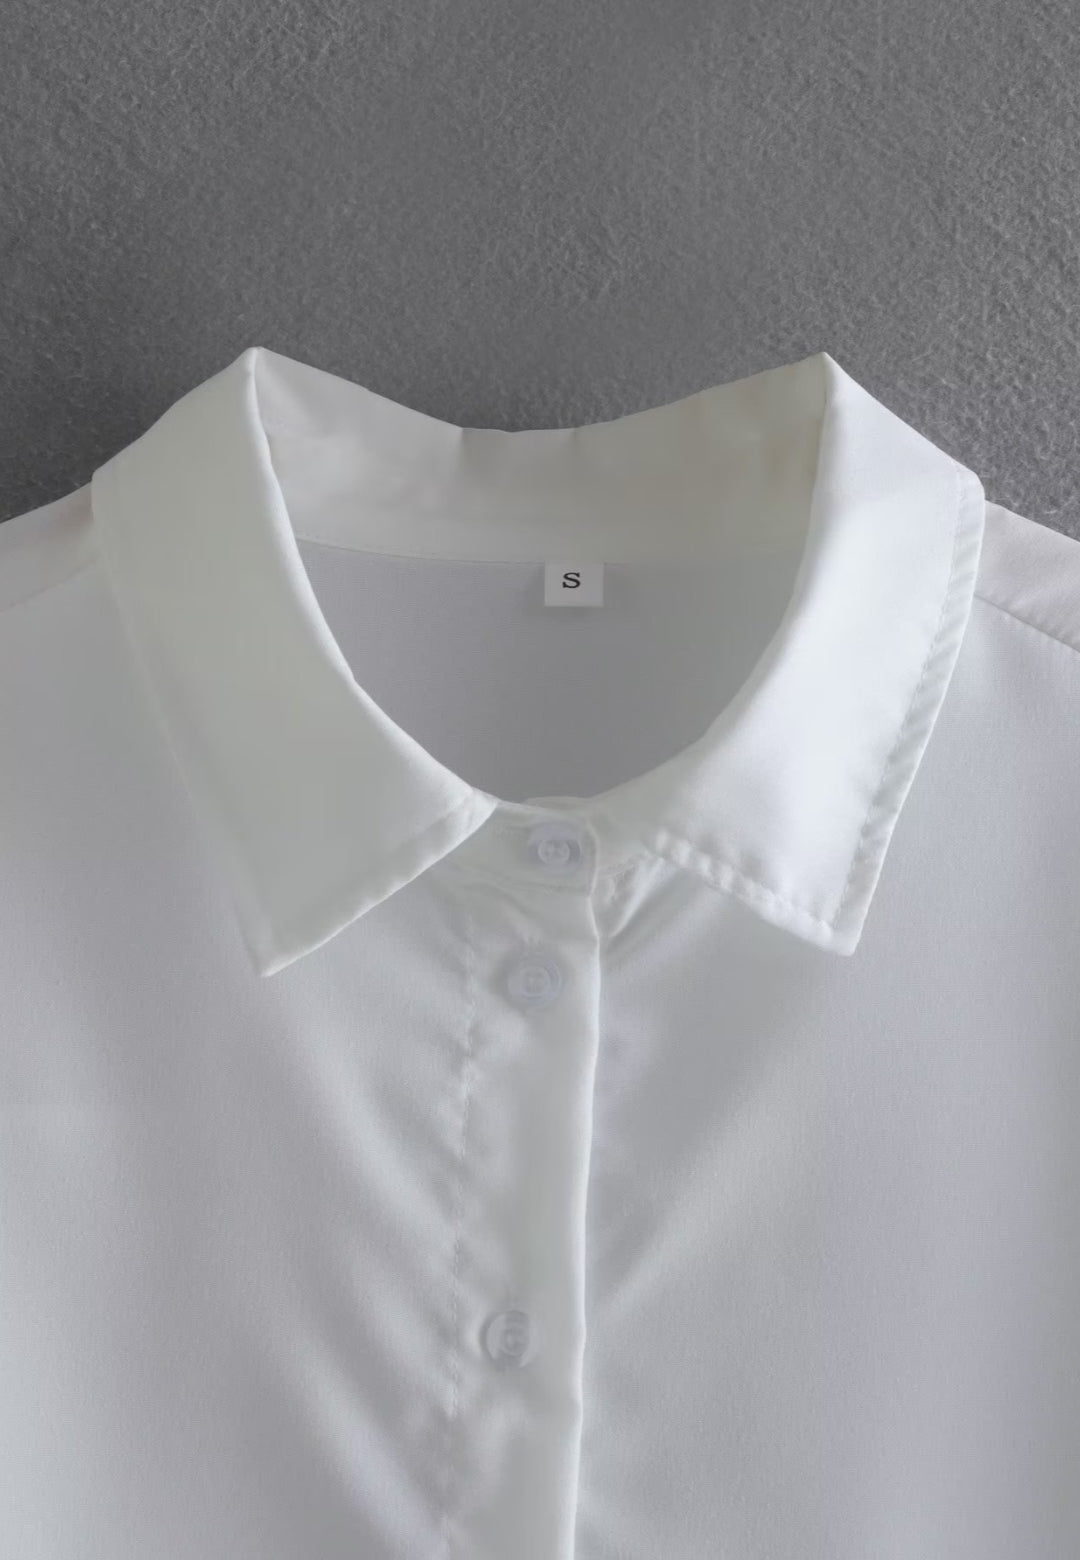 Embellished Collared Long Sleeve Shirt